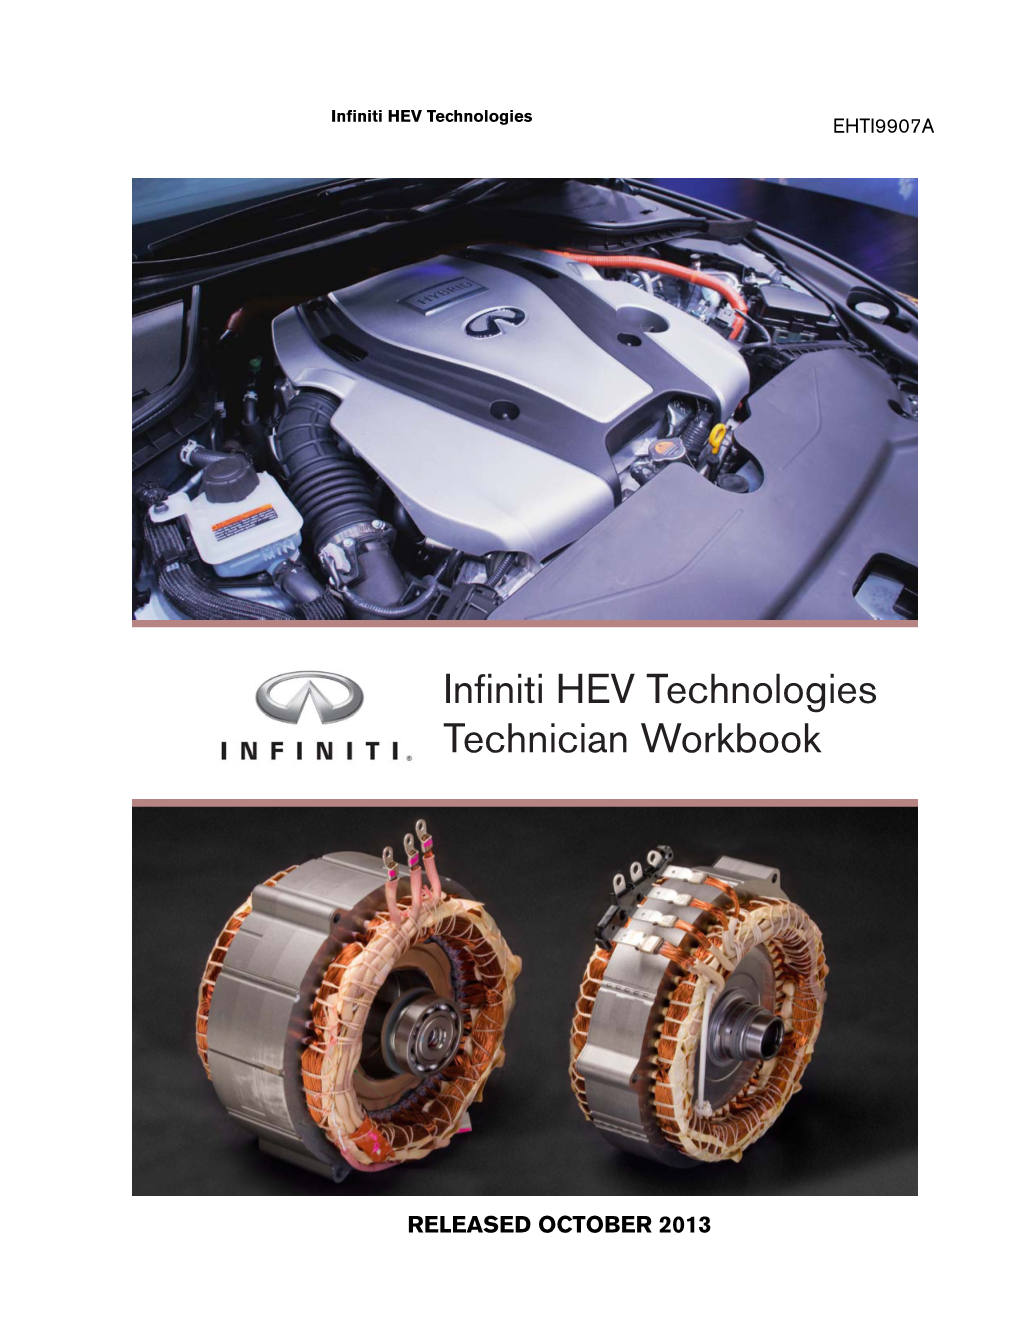 Infiniti HEV Technologies Technician Workbook